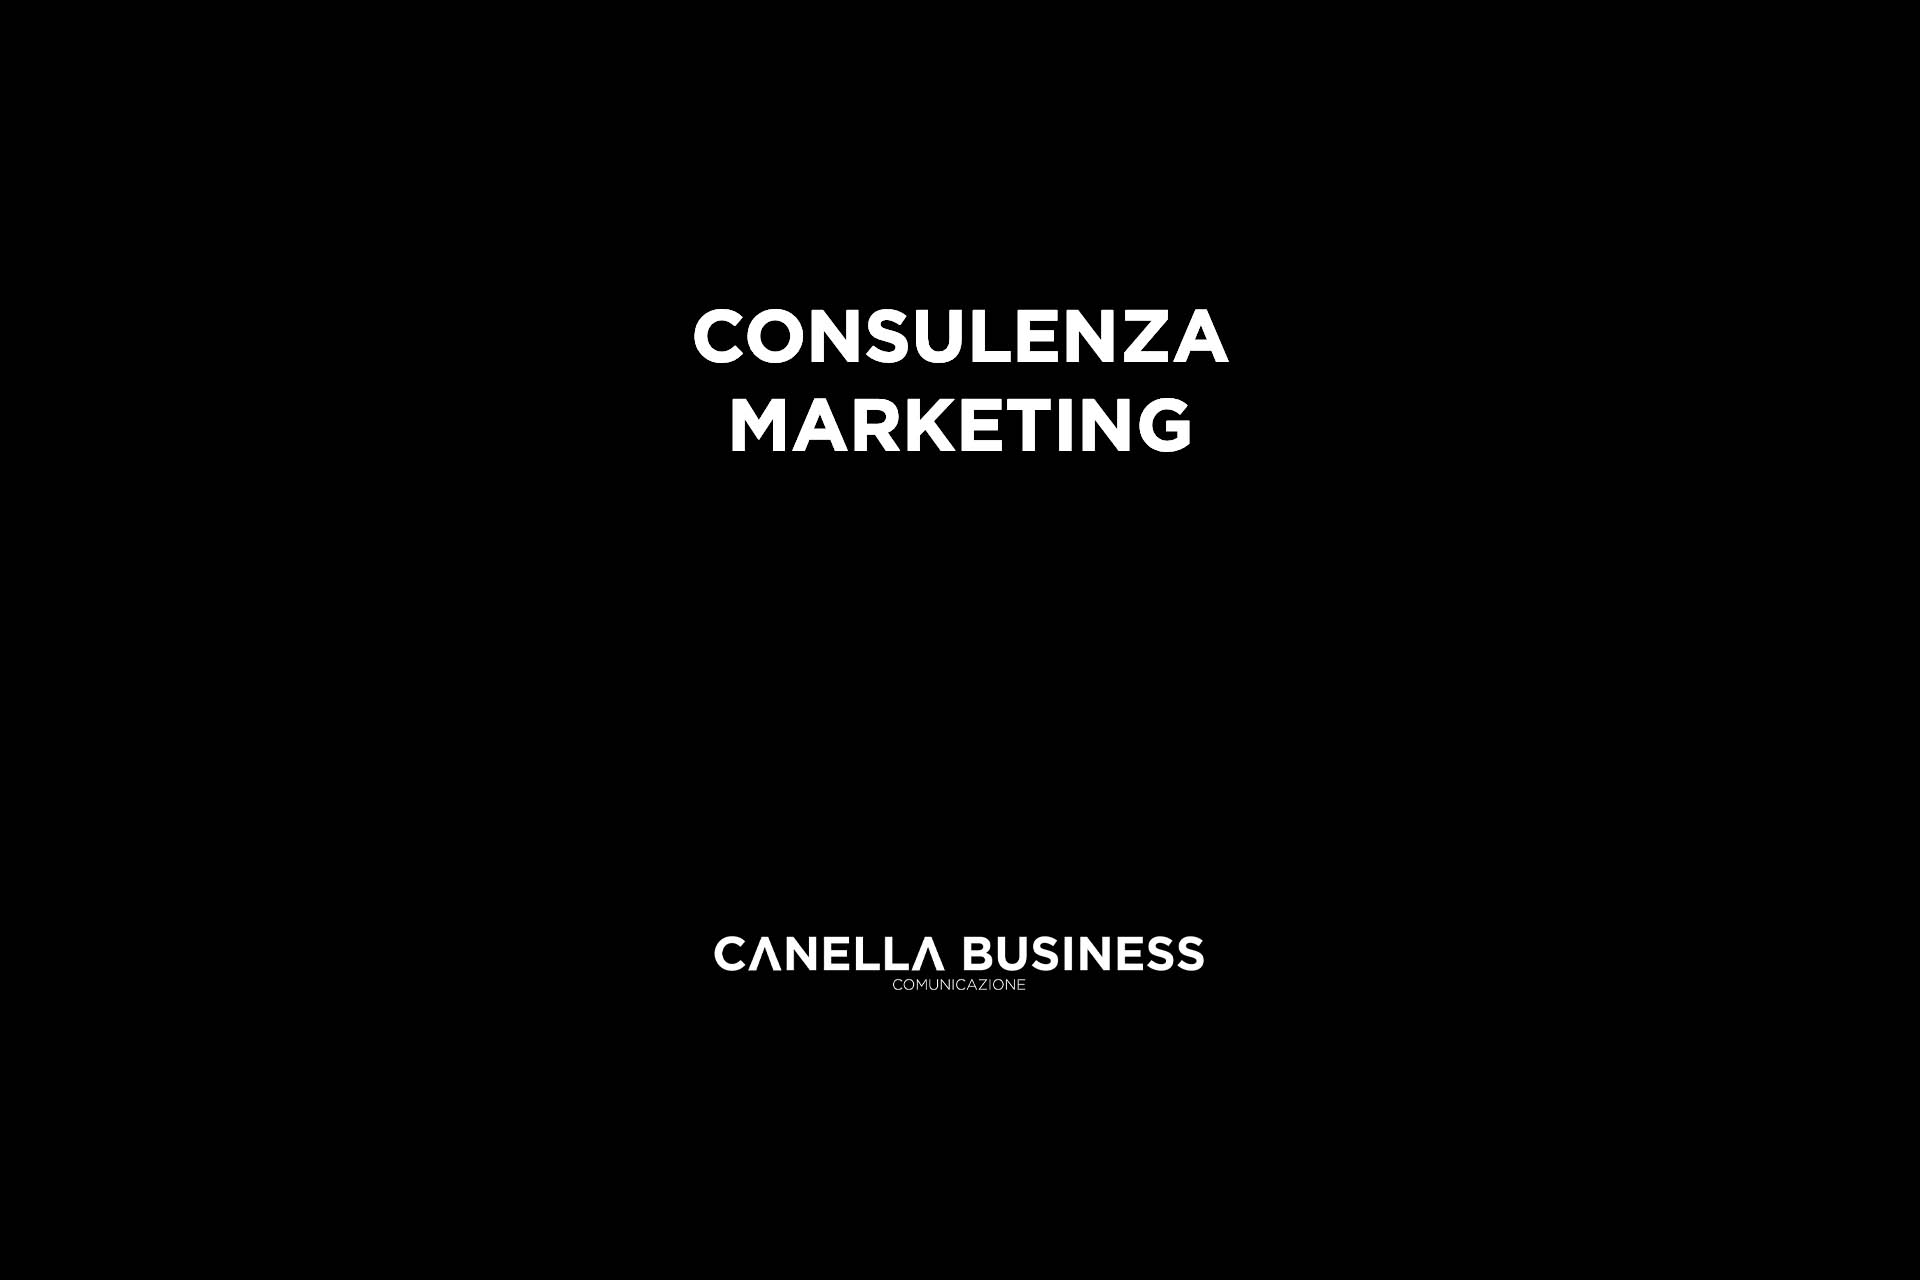 Consulenza marketing